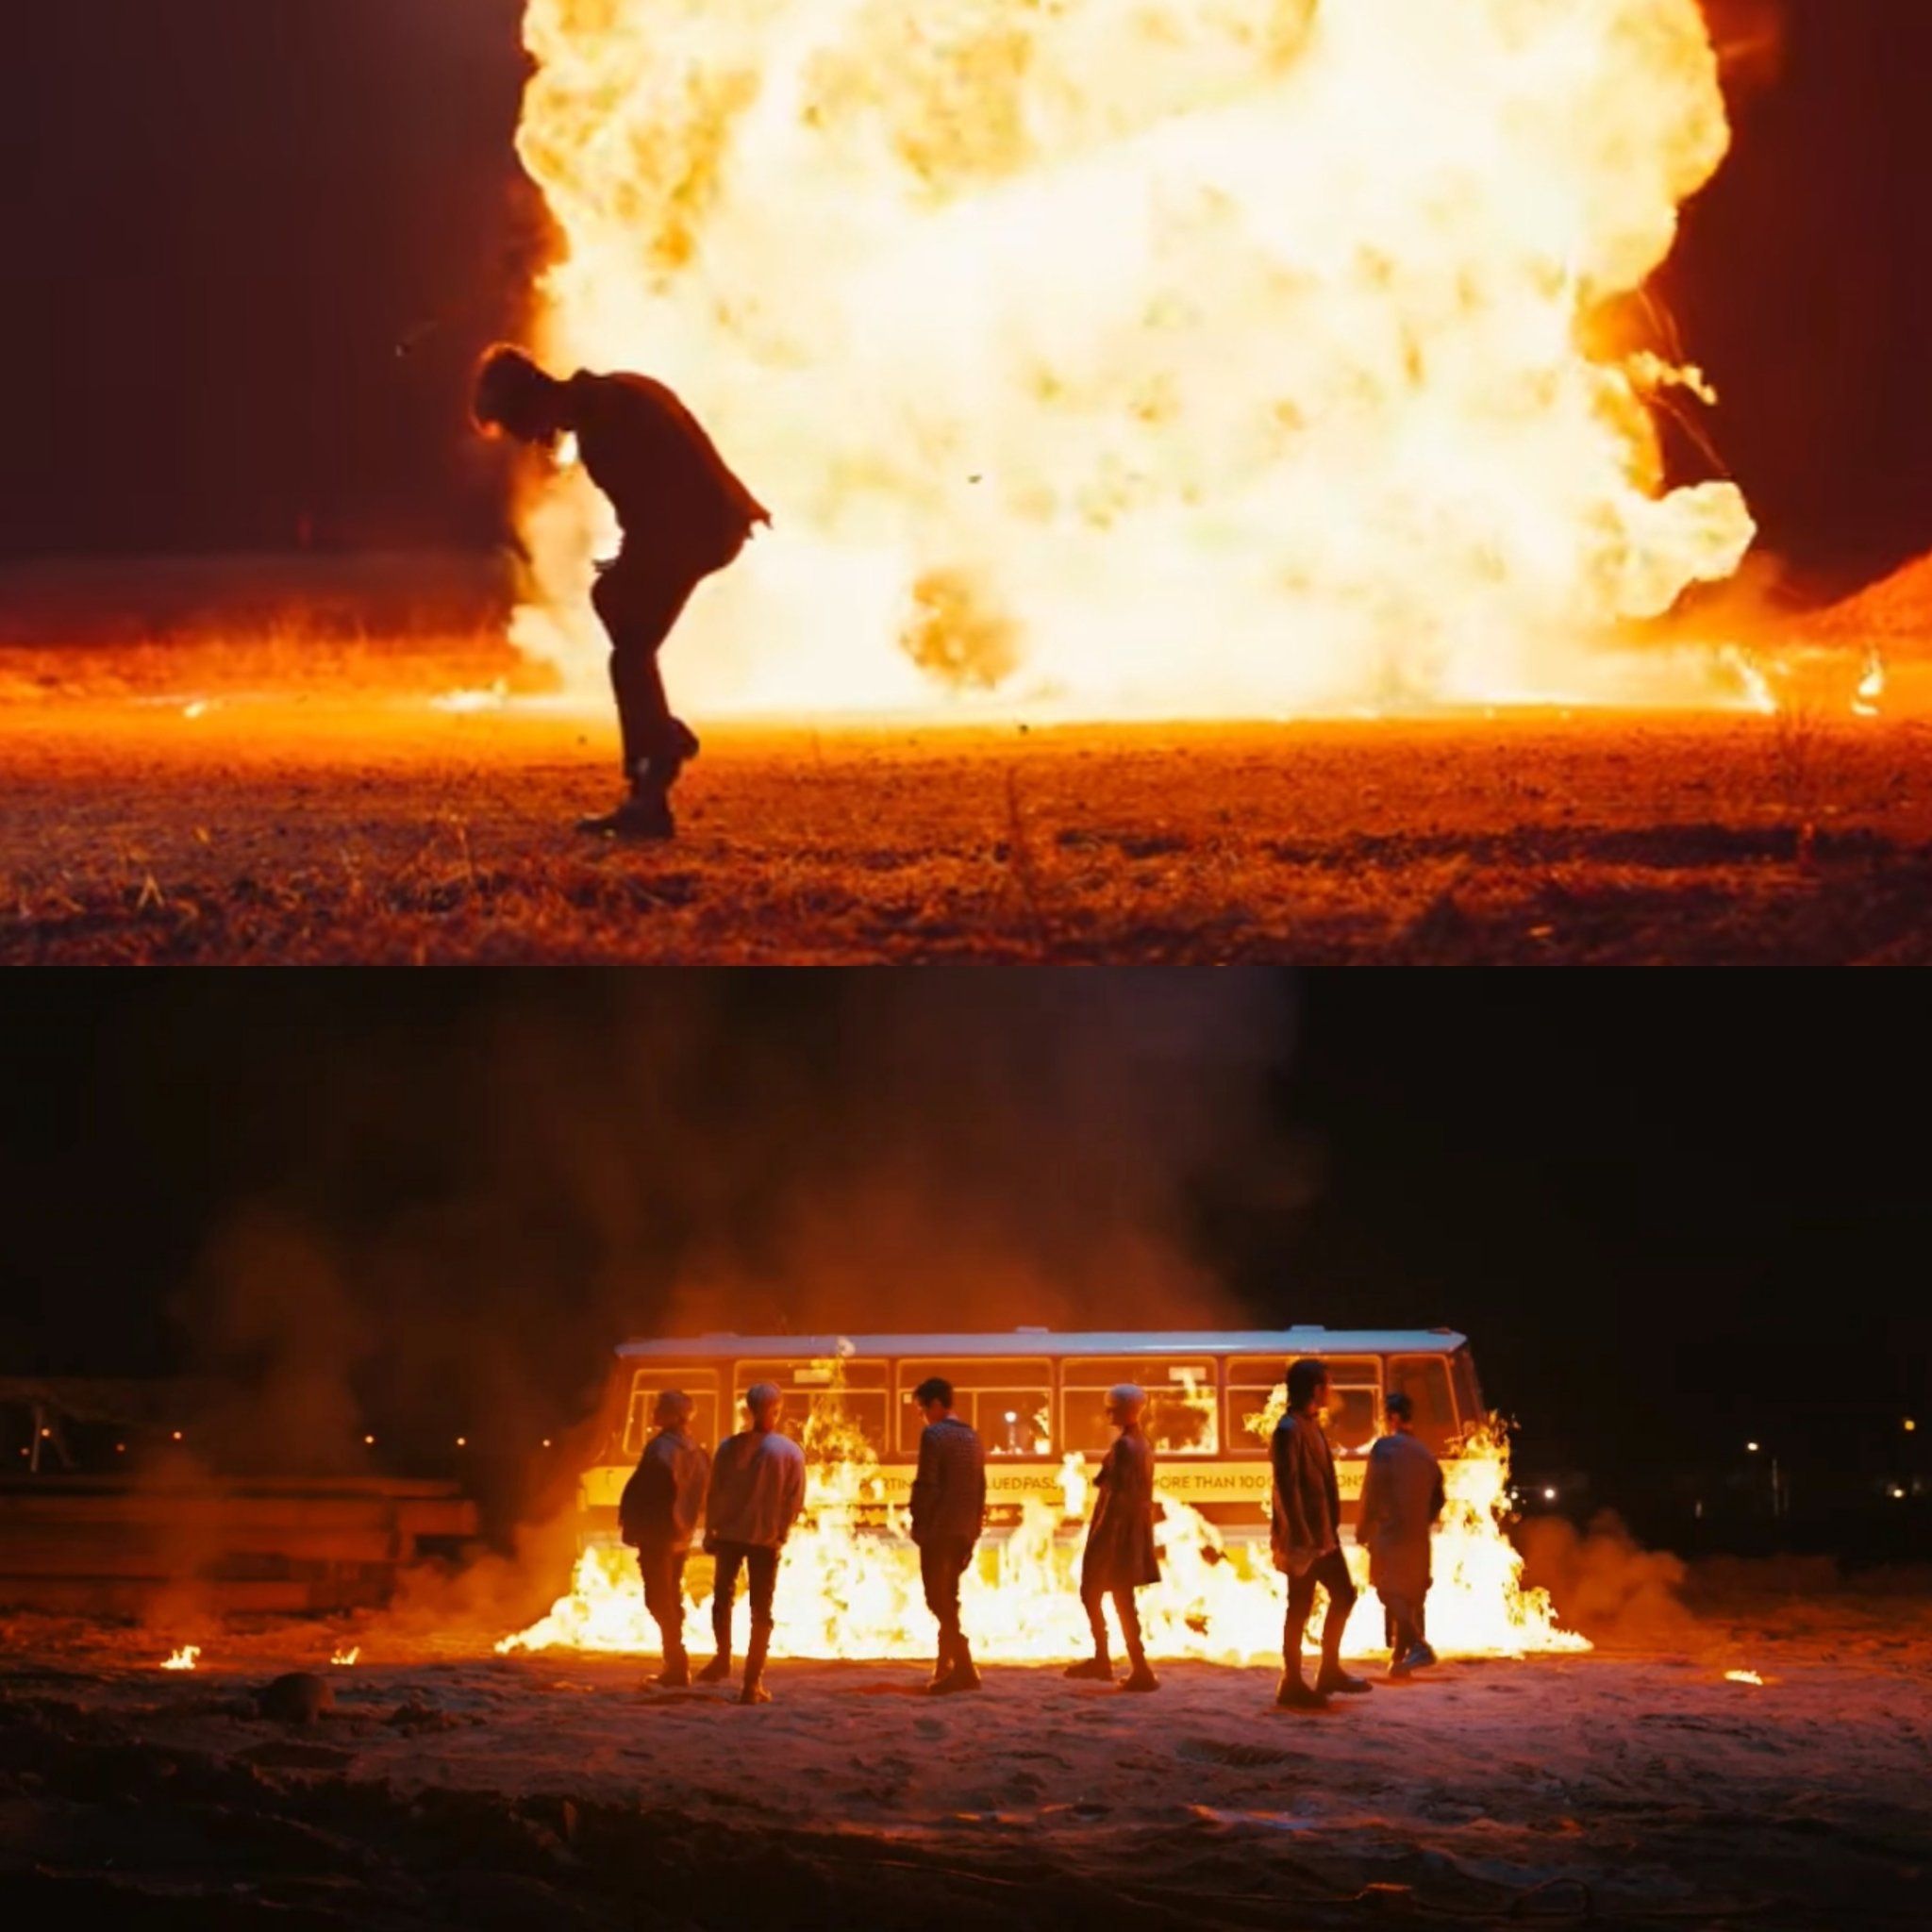 B.I dan iKON membakar mobil/bus dalam MV